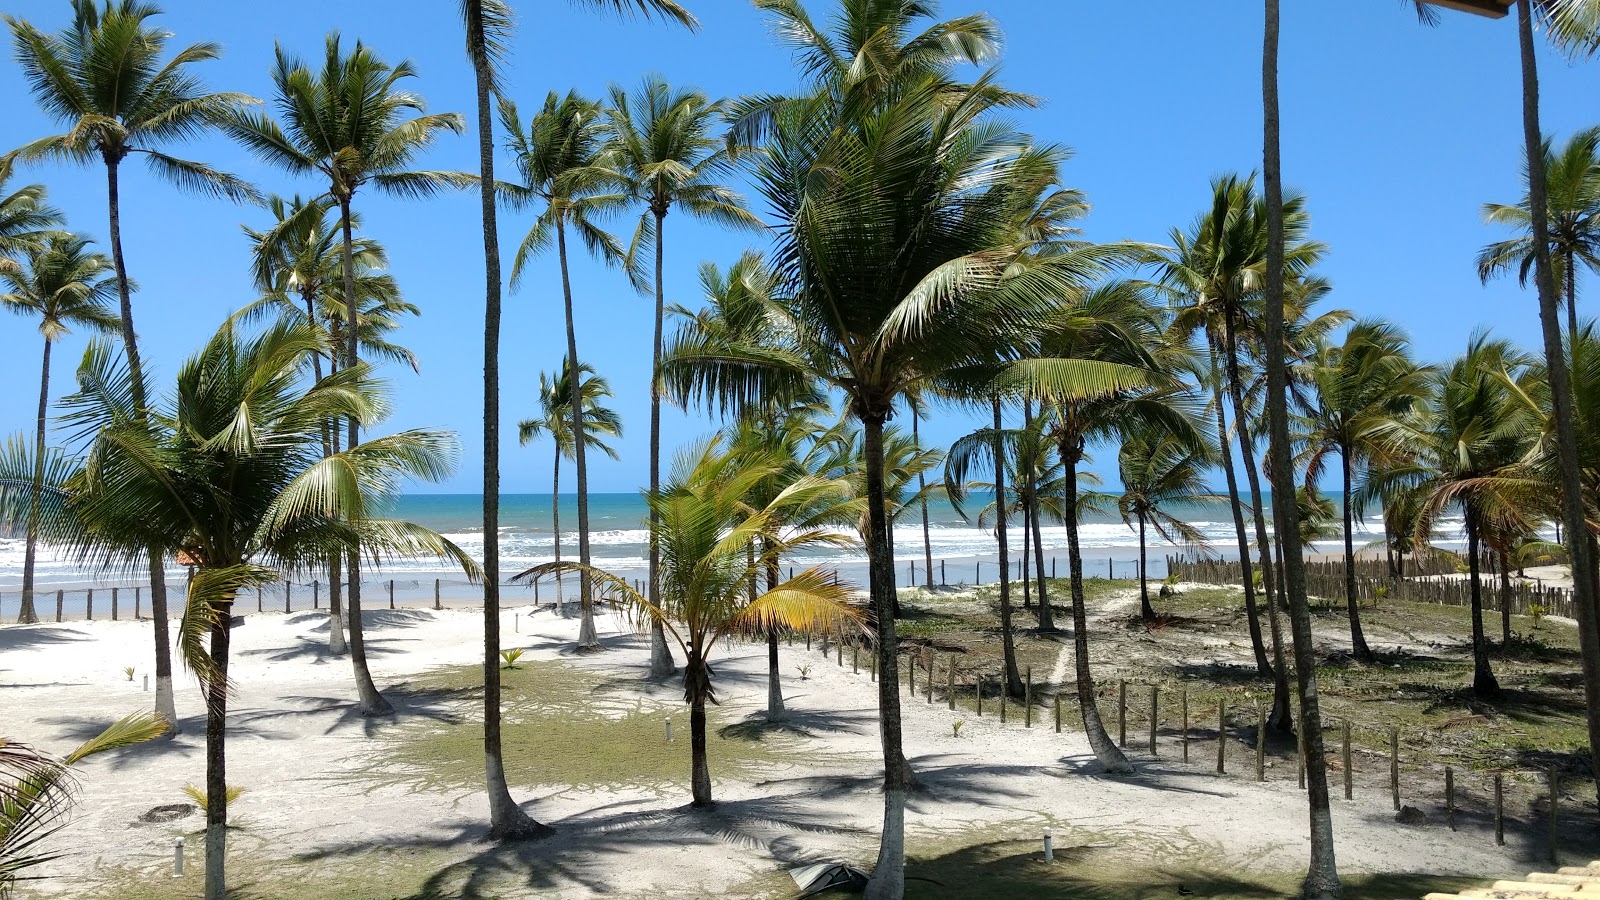 Foto de Praia da Realeza Bahia con parcialmente limpio nivel de limpieza